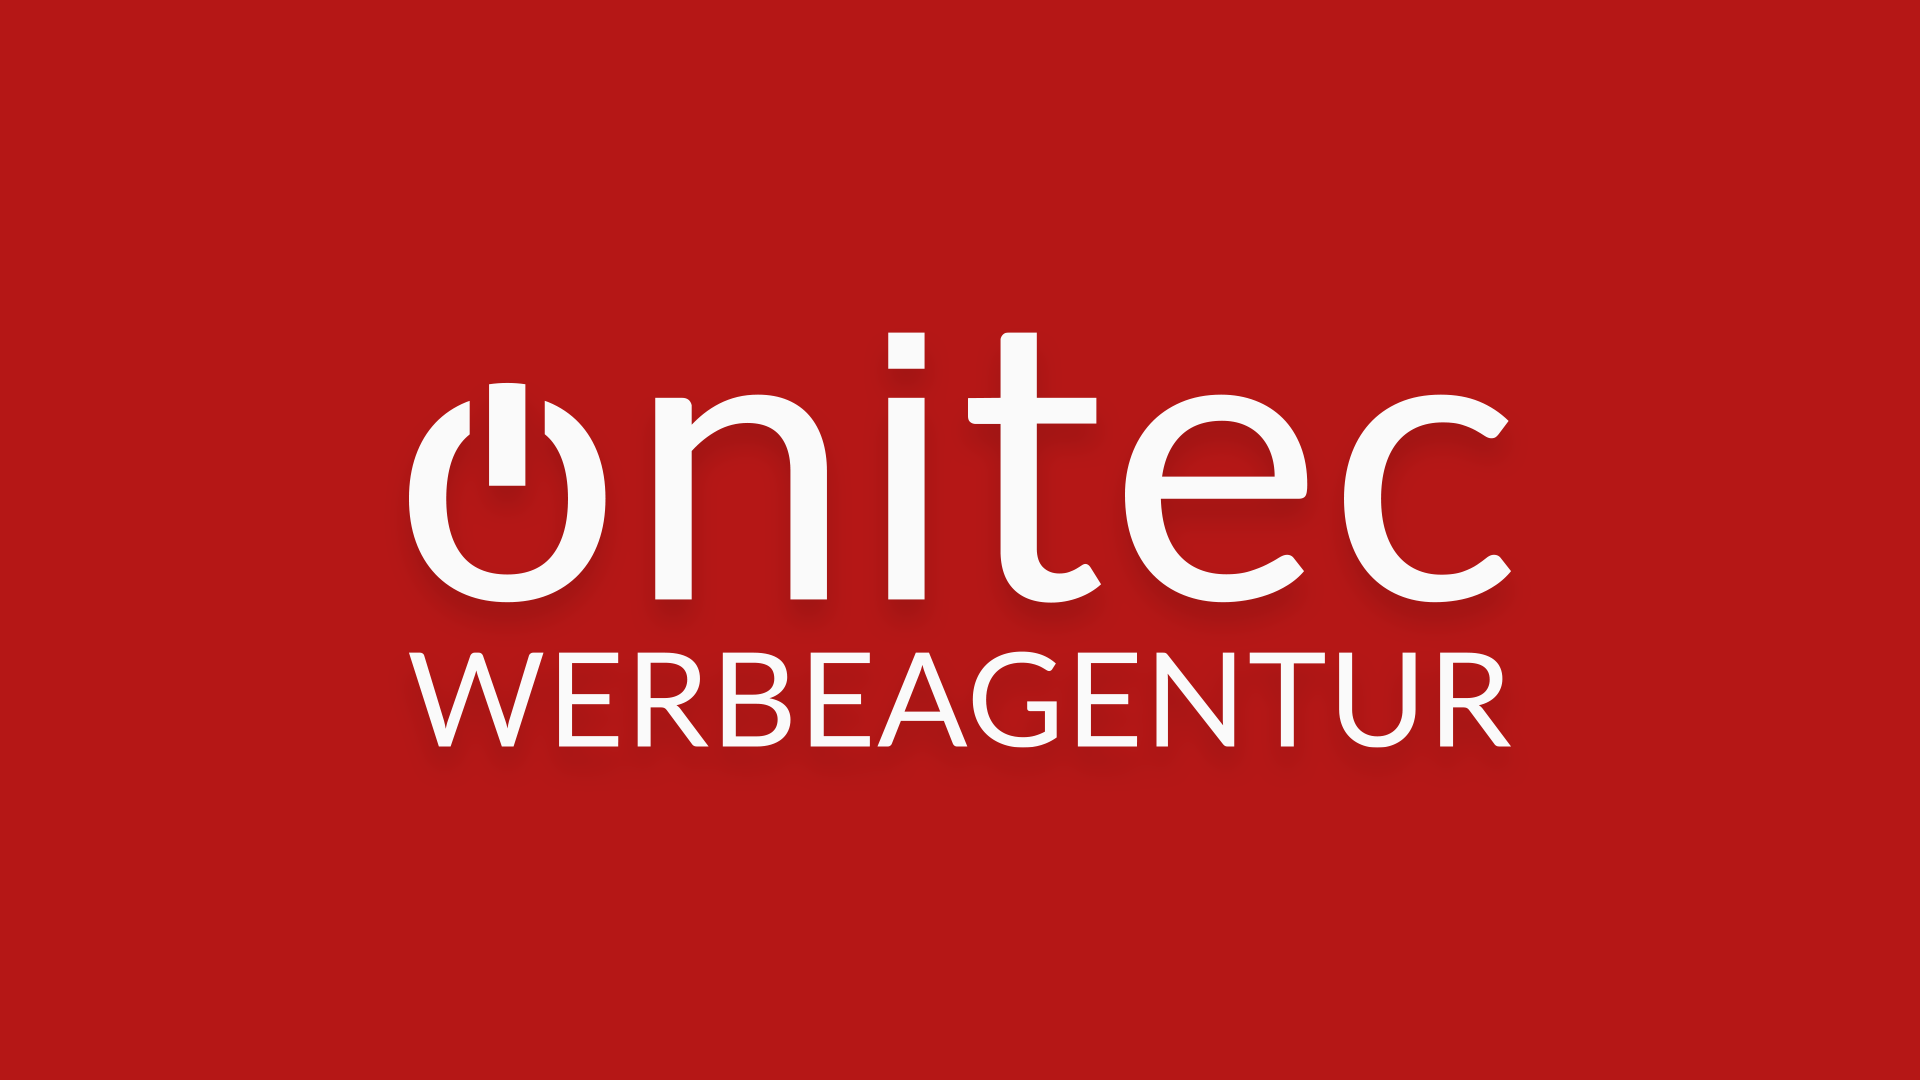 onitec_Background_Desktop_middle.png – onitec Werbeagentur GmbH & Co. KG